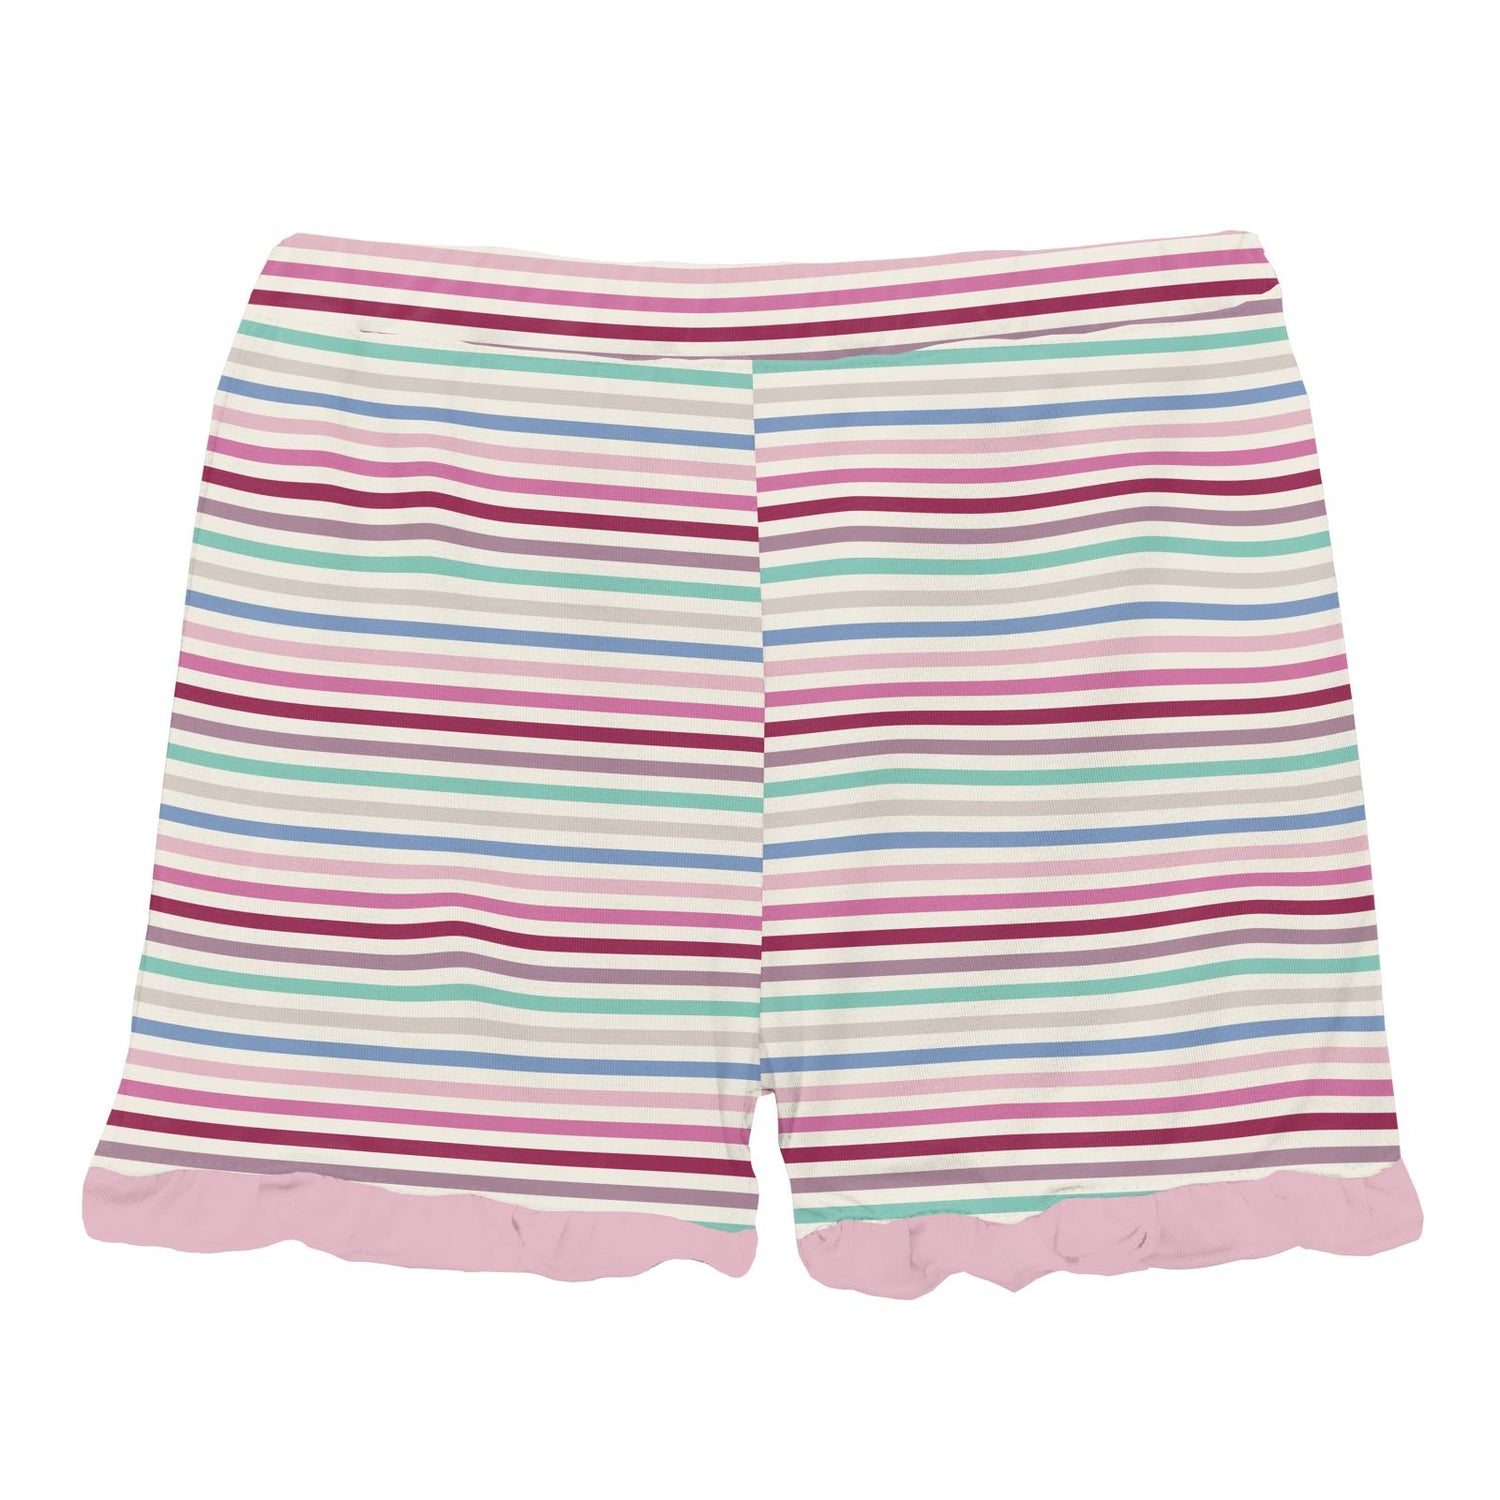 Print Ruffle Shorts in Make Believe Stripe